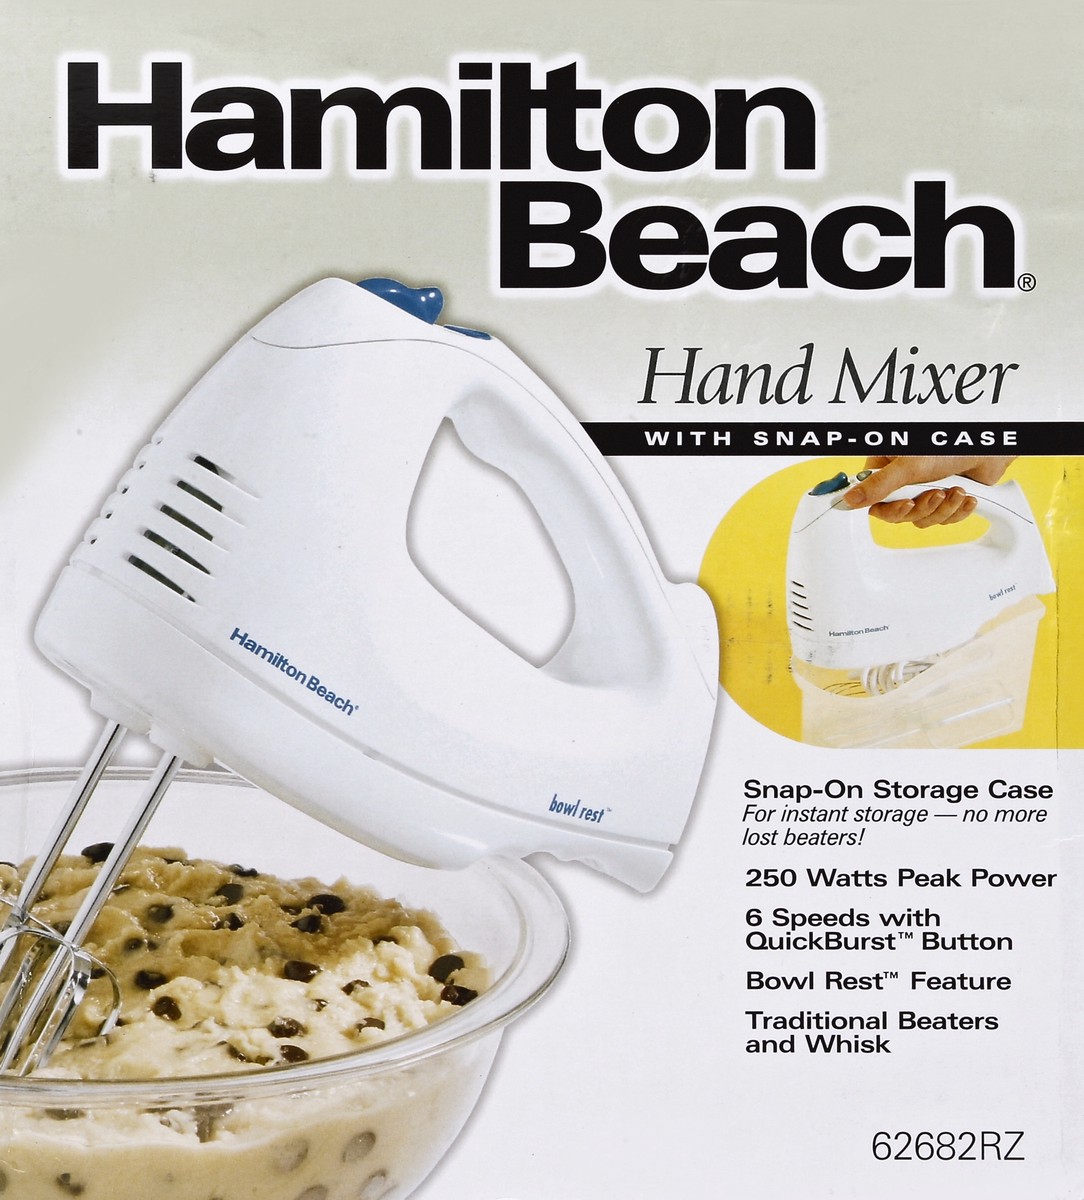 Hamilton Beach Hand Mixer, with Snap-On Case